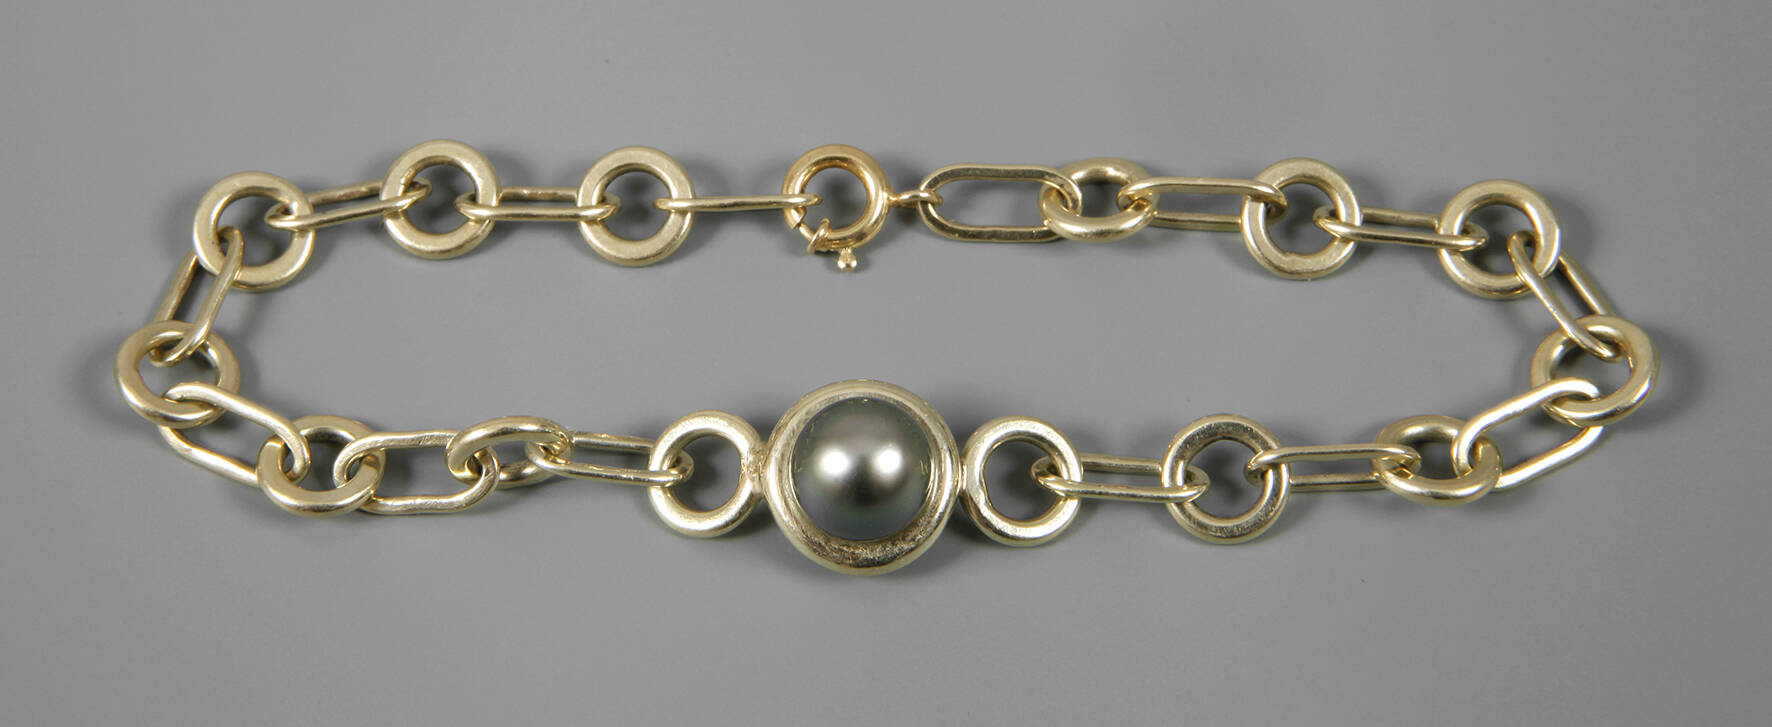 Armband mit grauer Perle